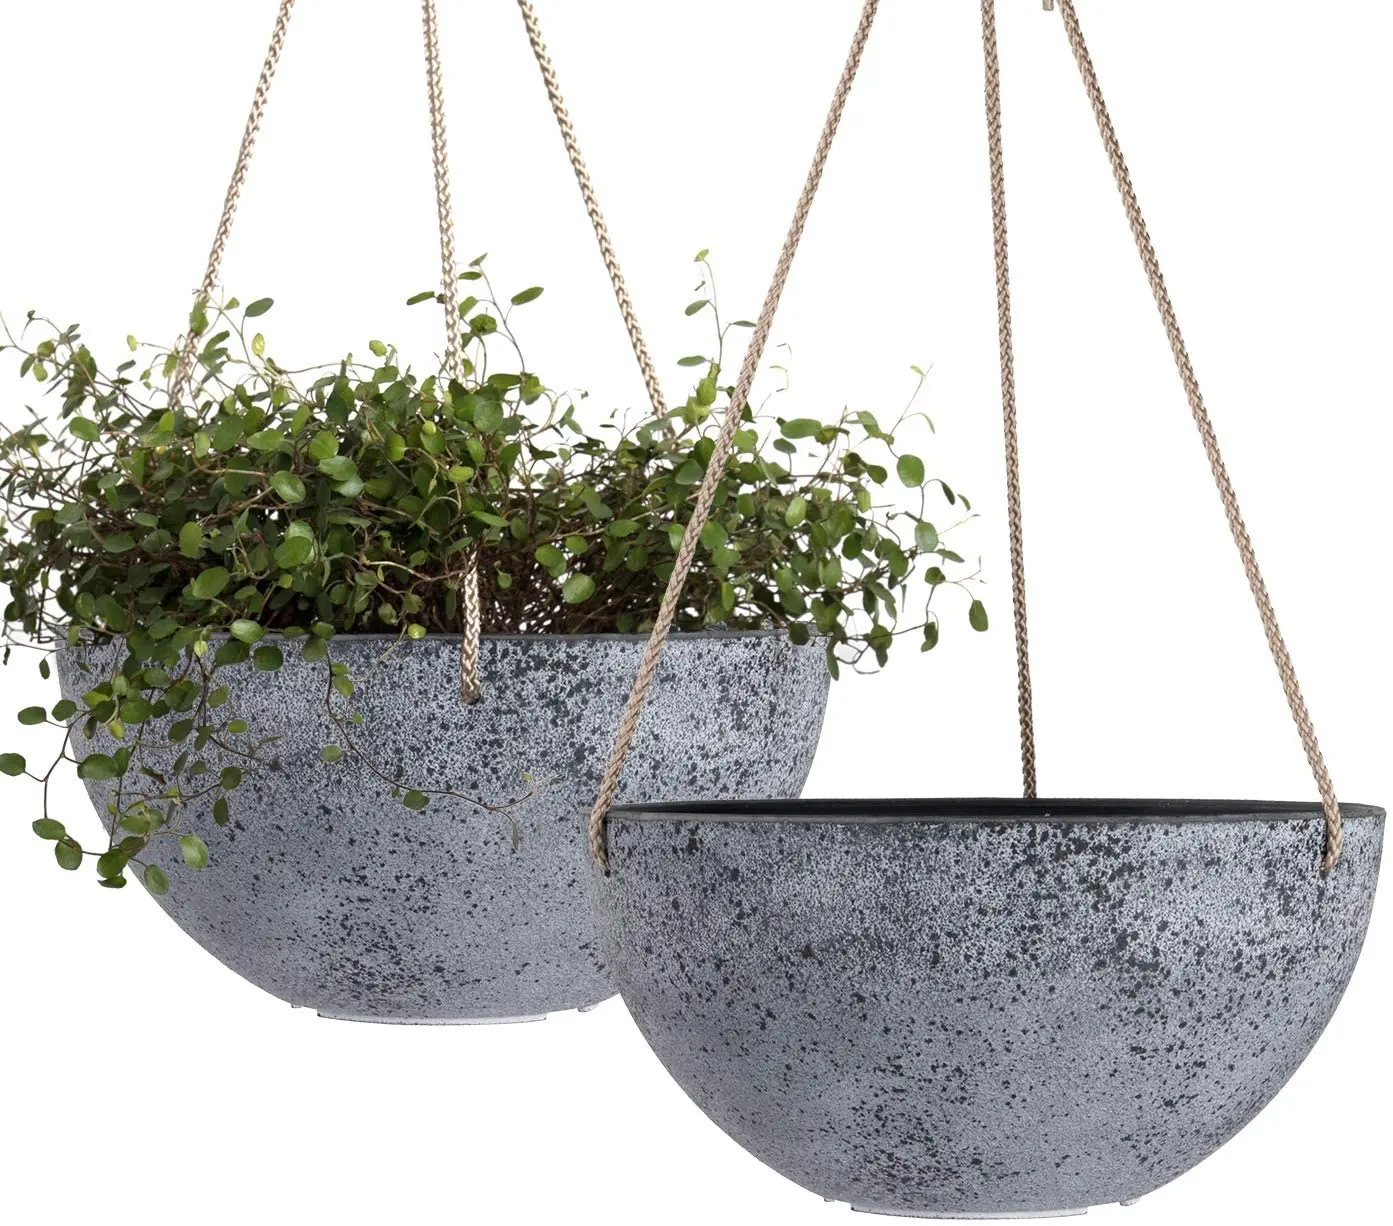 New Outdoor Indoor Garden Plant Flower Pot Balcony Plastic Planter Patio Decor Y 